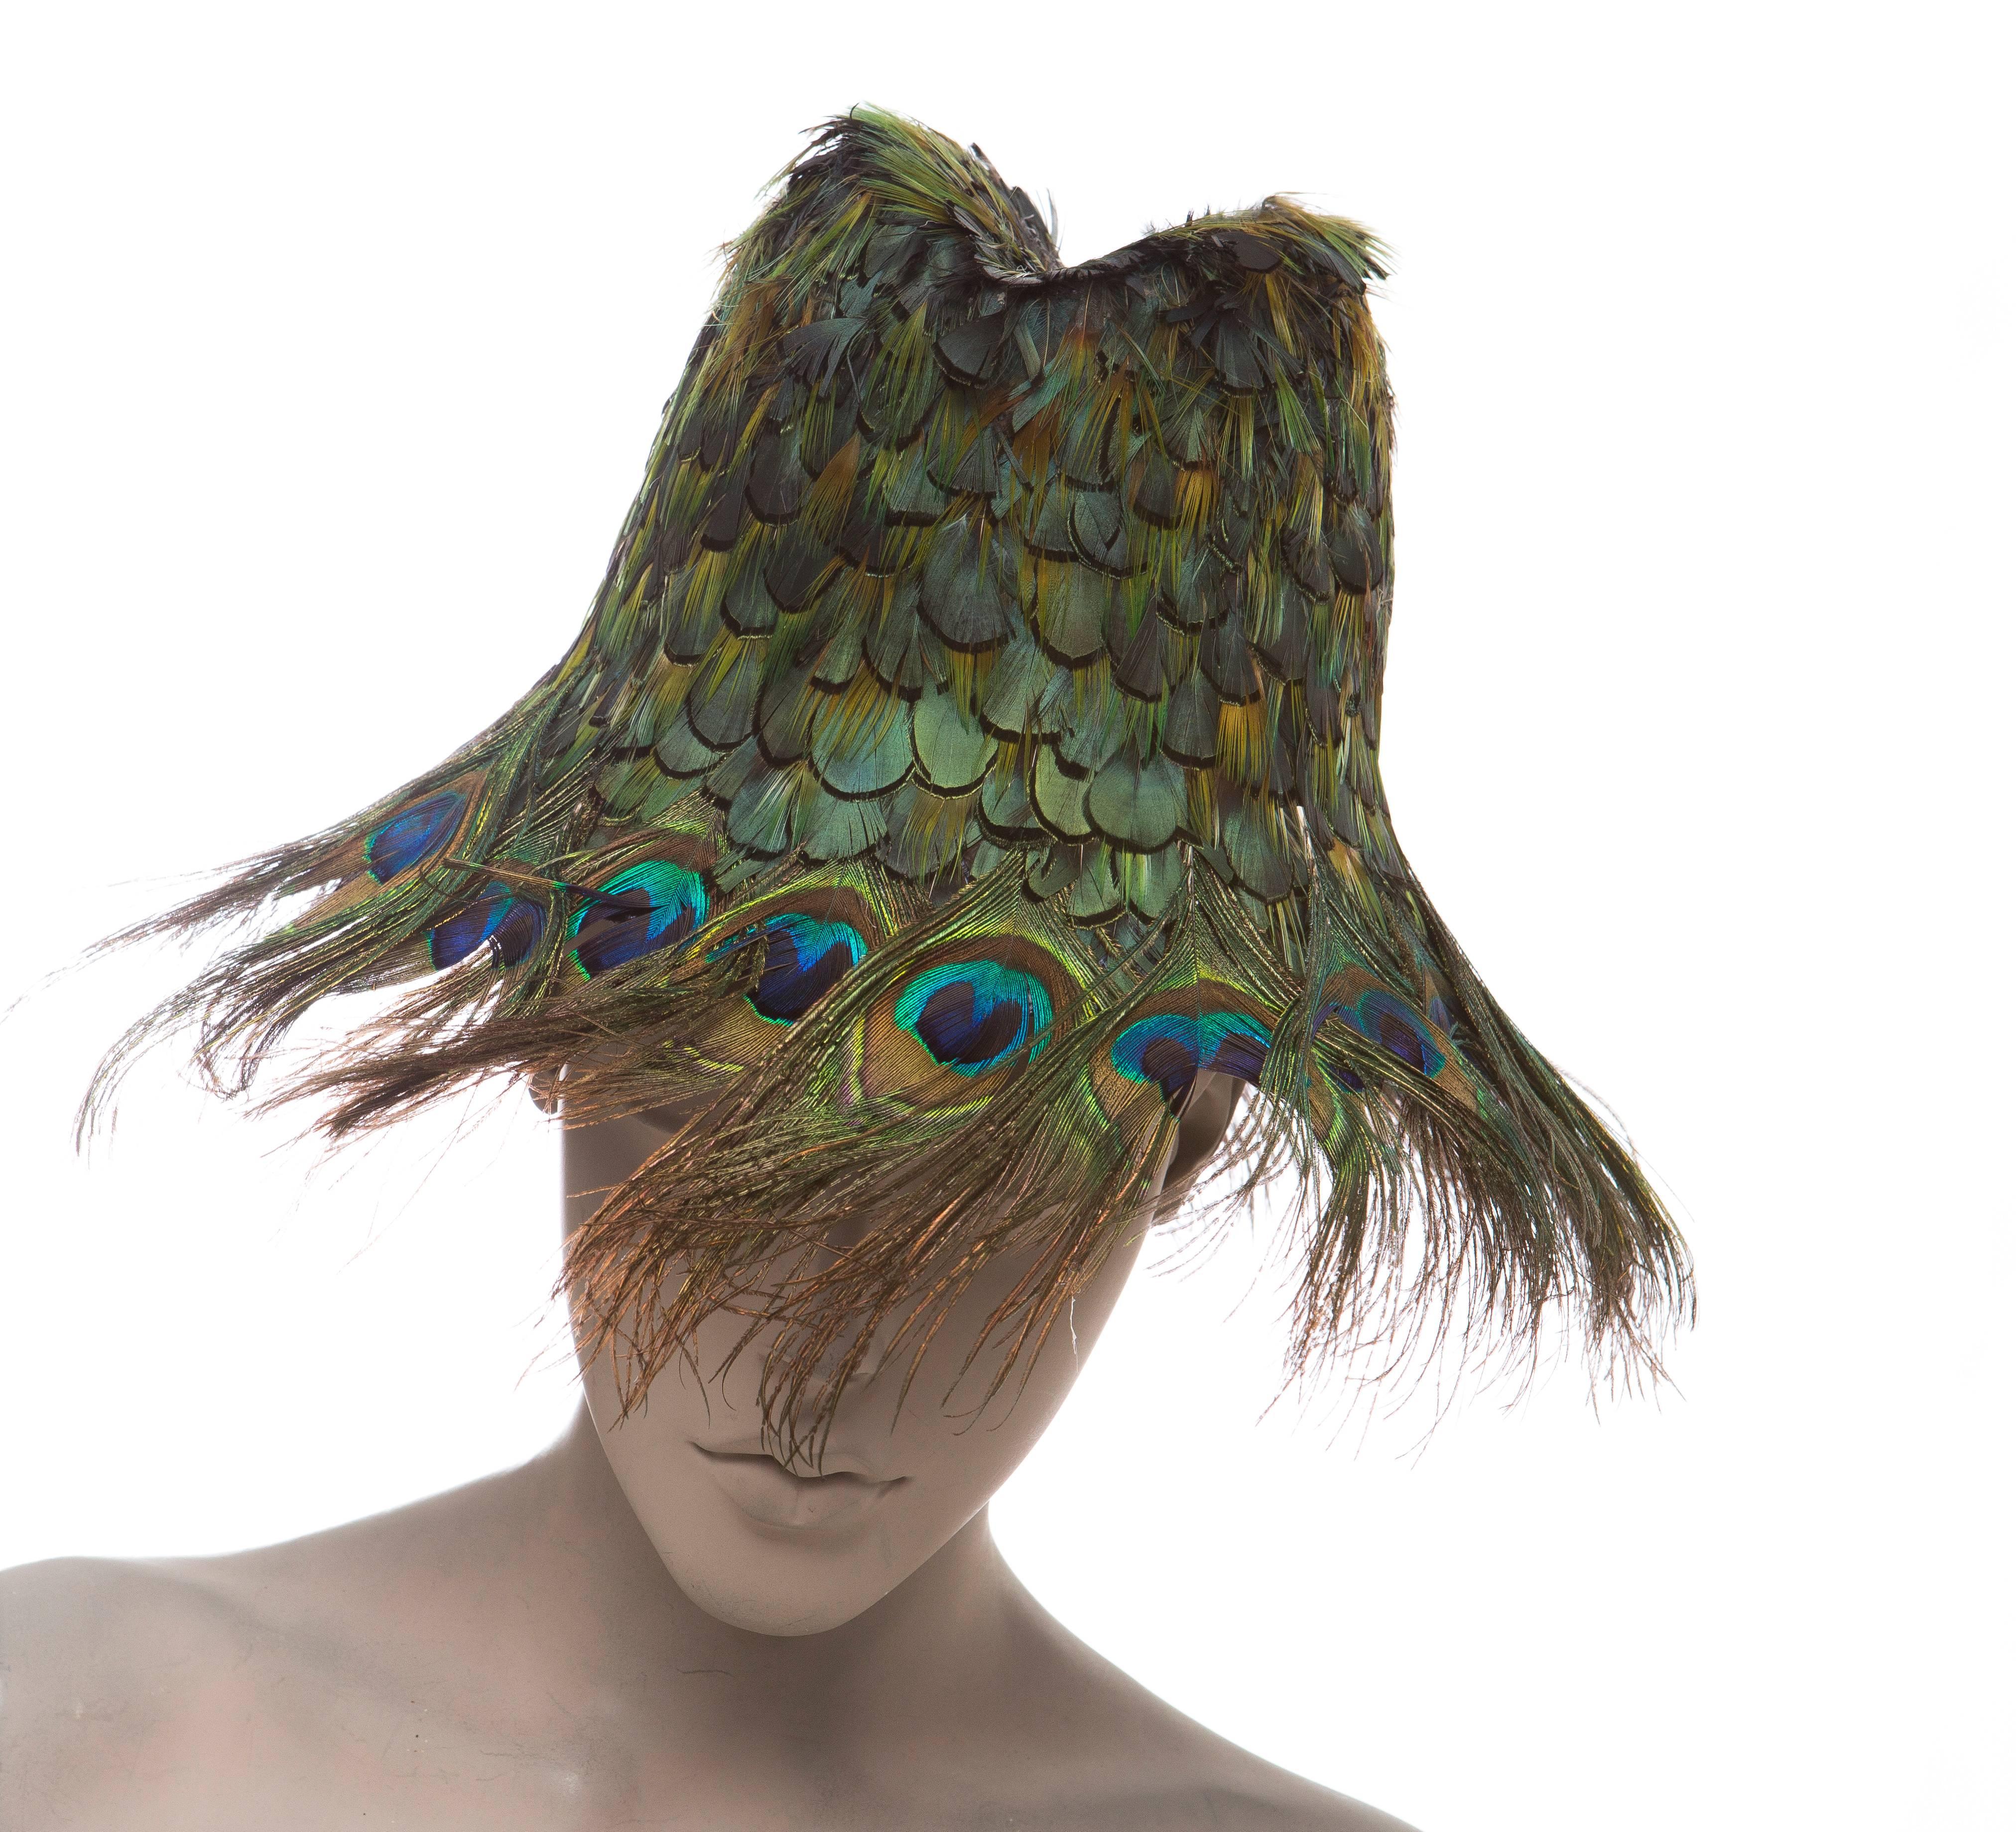 Prada, Spring-Summer 2005 runway peacock feather hat with Prada hat box.

Size: Large

Circumference: 18"
Brim: 2"